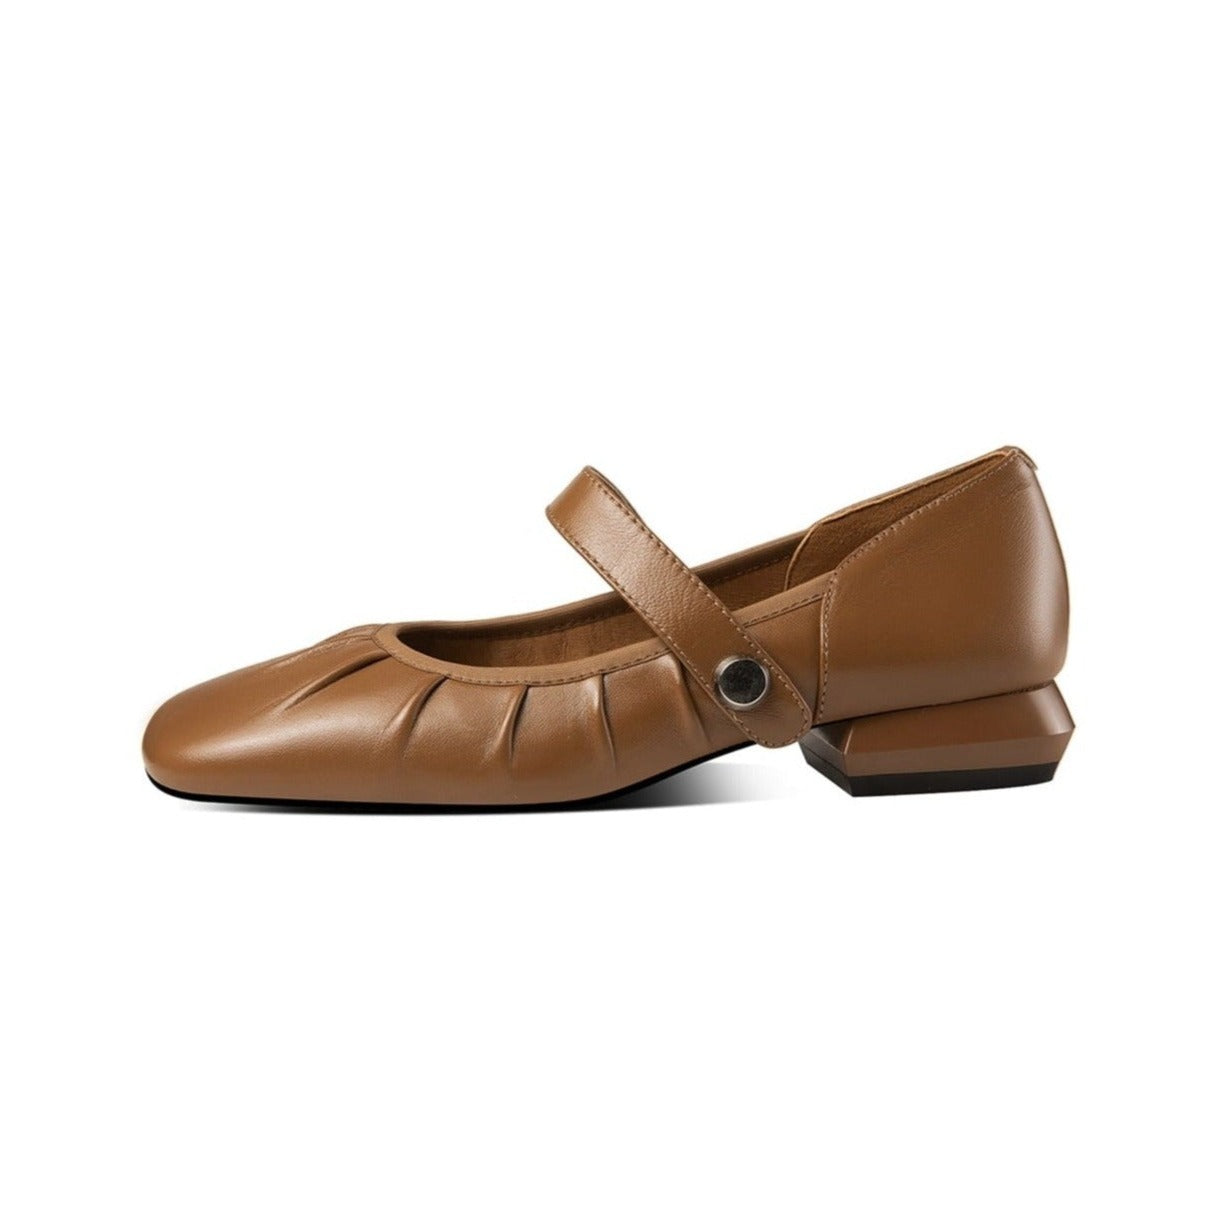 TinaCus Women's Handmade Genuine Leather Flat Heel Cute Mary Jane Shoes